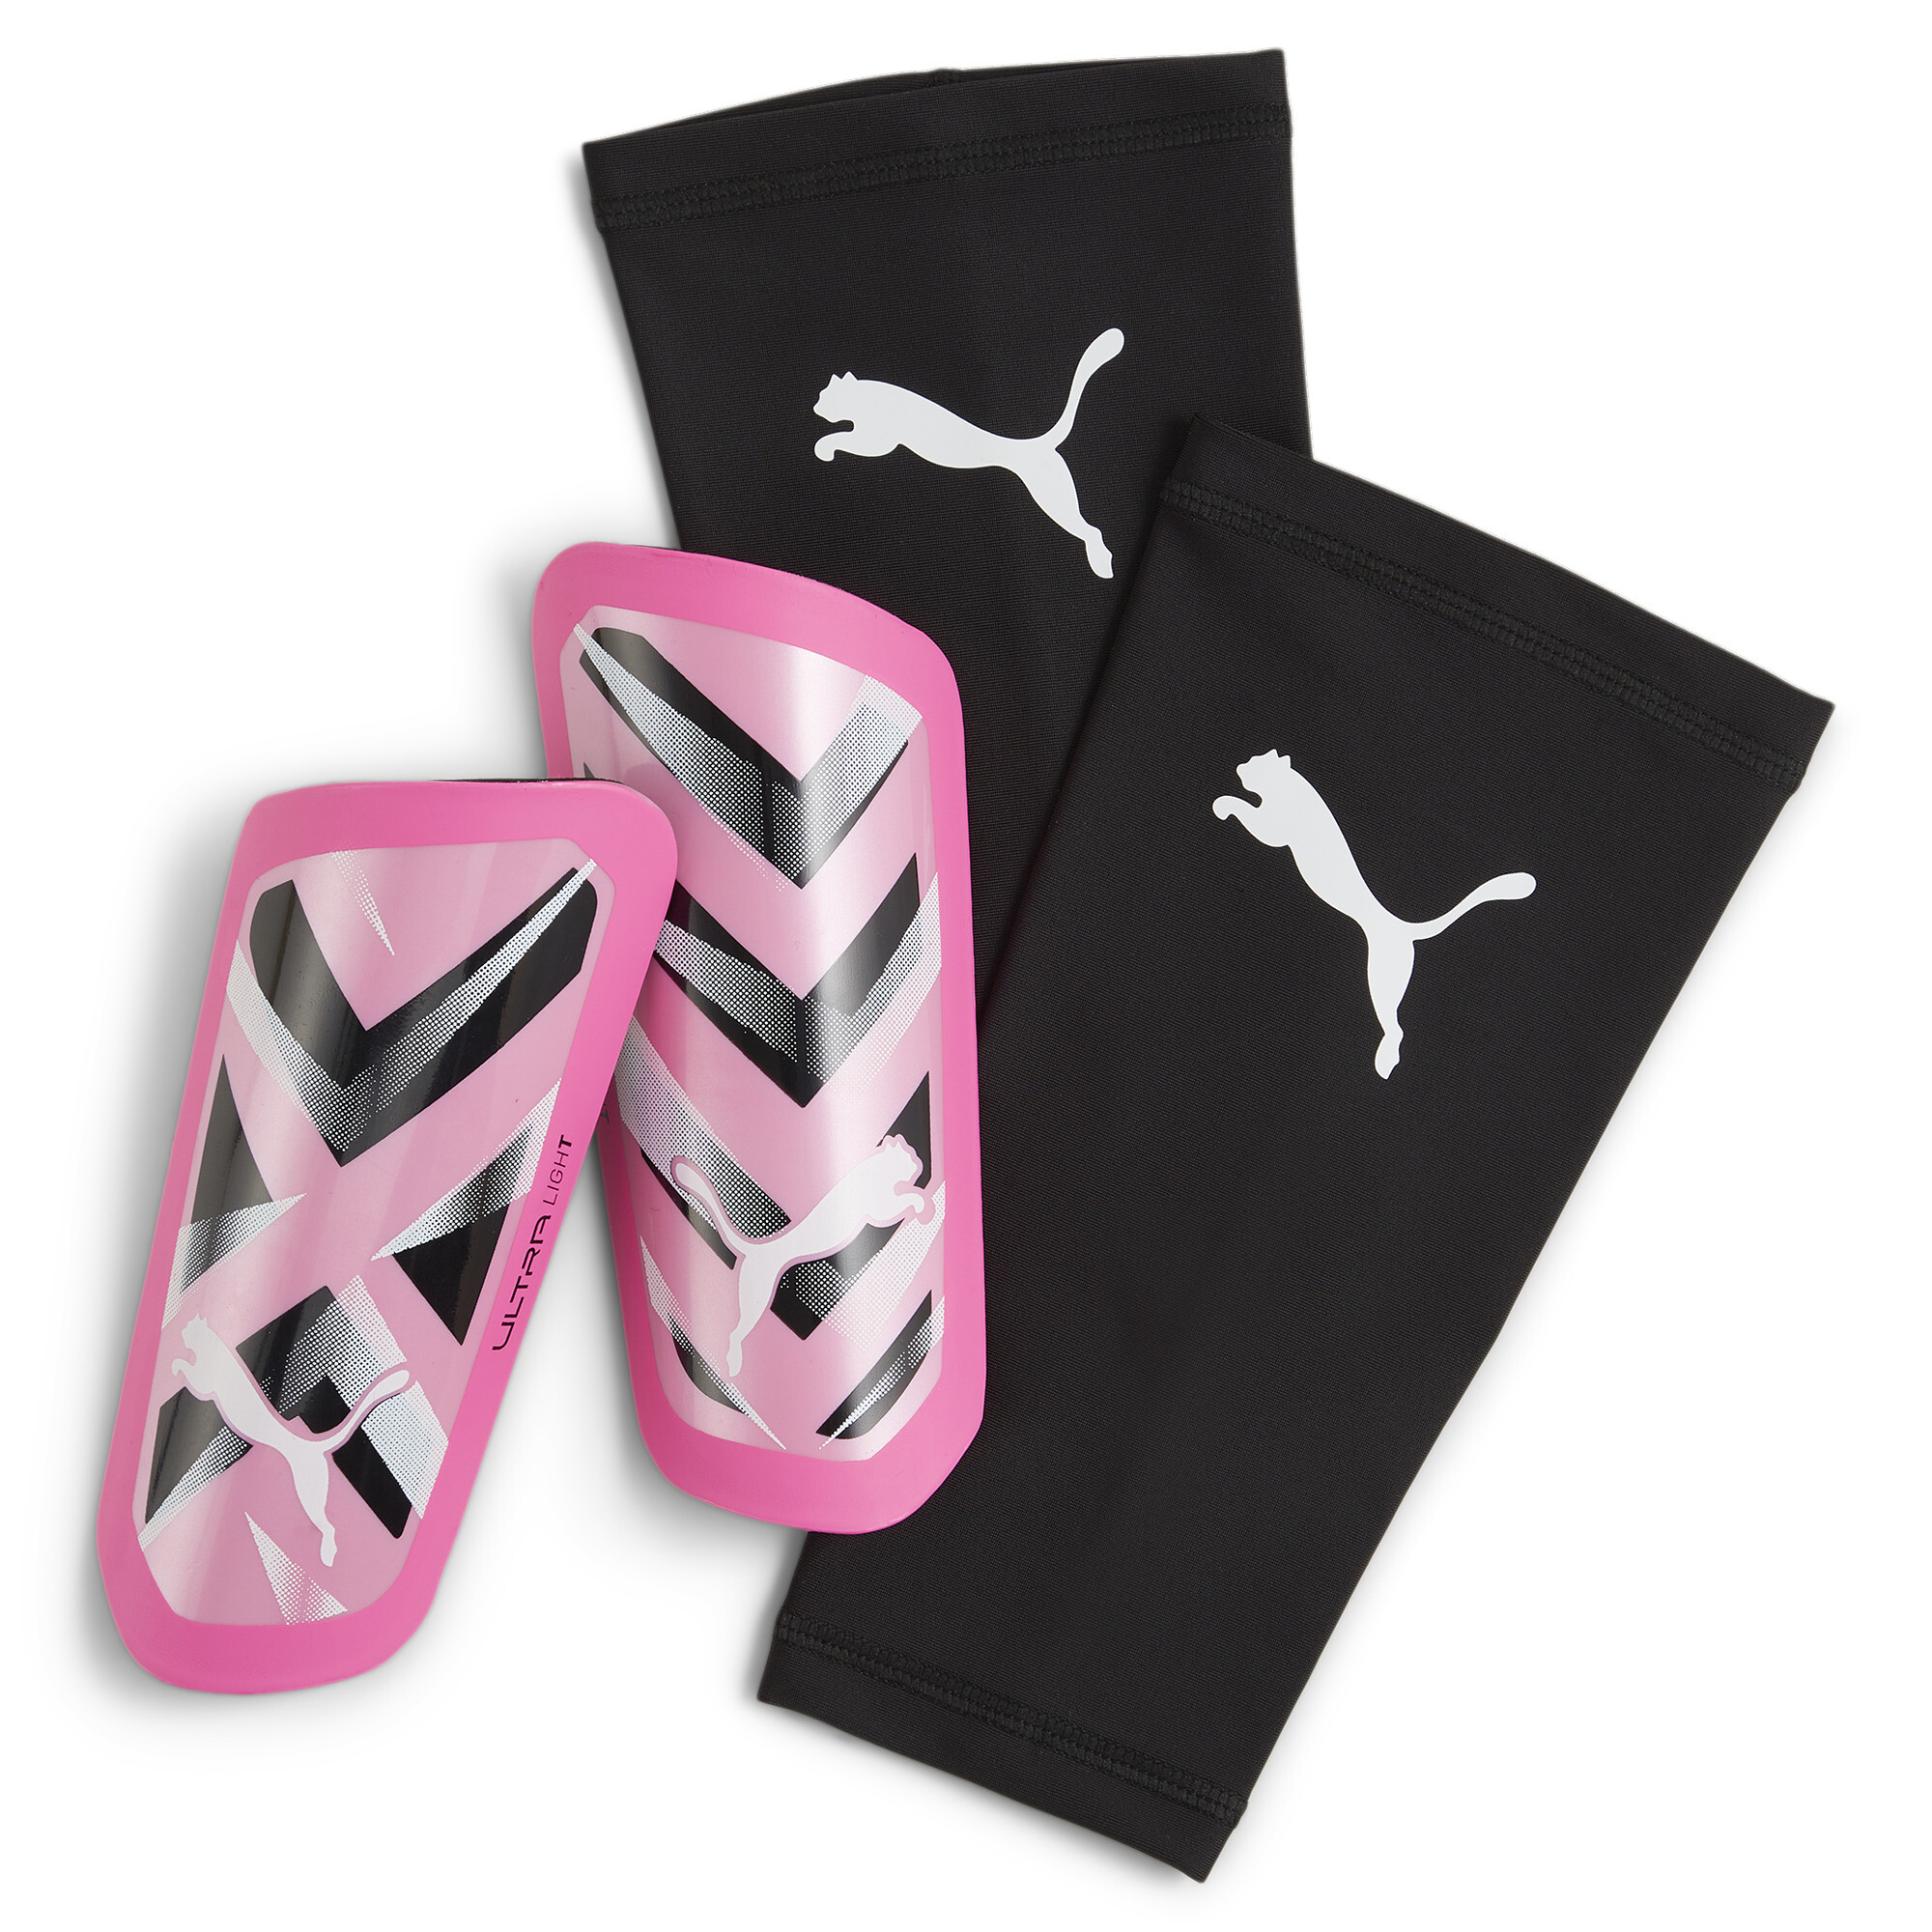 Puma ULTRA Light Sleeve Football Shin Guards, Pink, Size M, Accessories